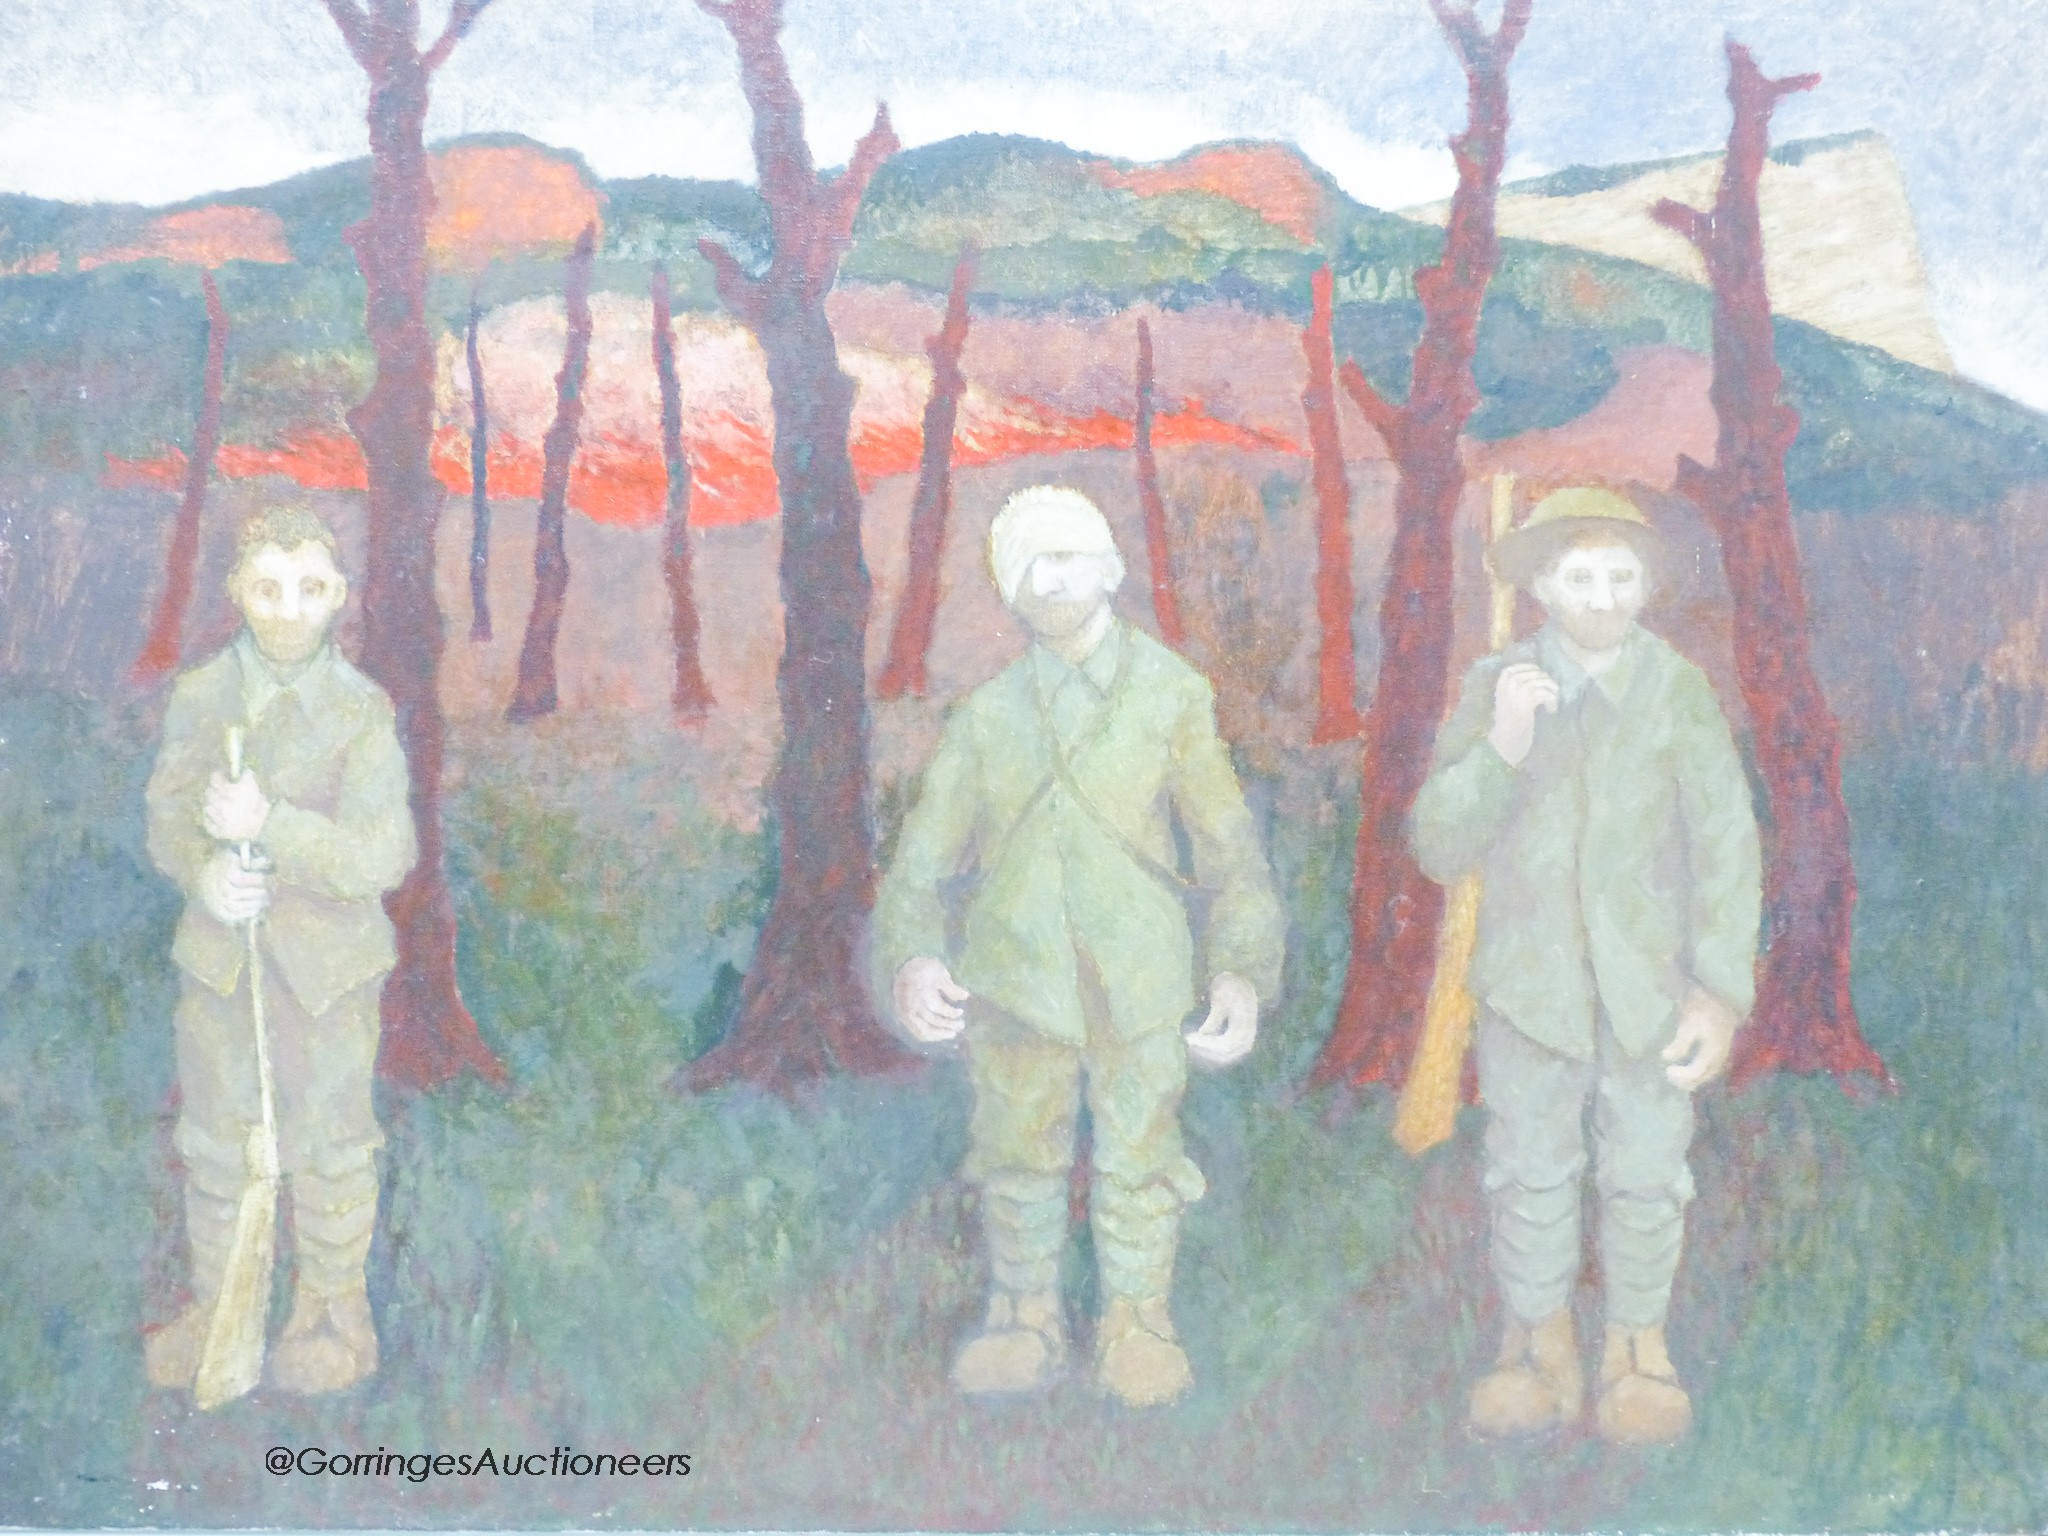 Gerald, R Jarman (1930-2014) unframed oil on canvas, Three soldiers, 142 x 106cm